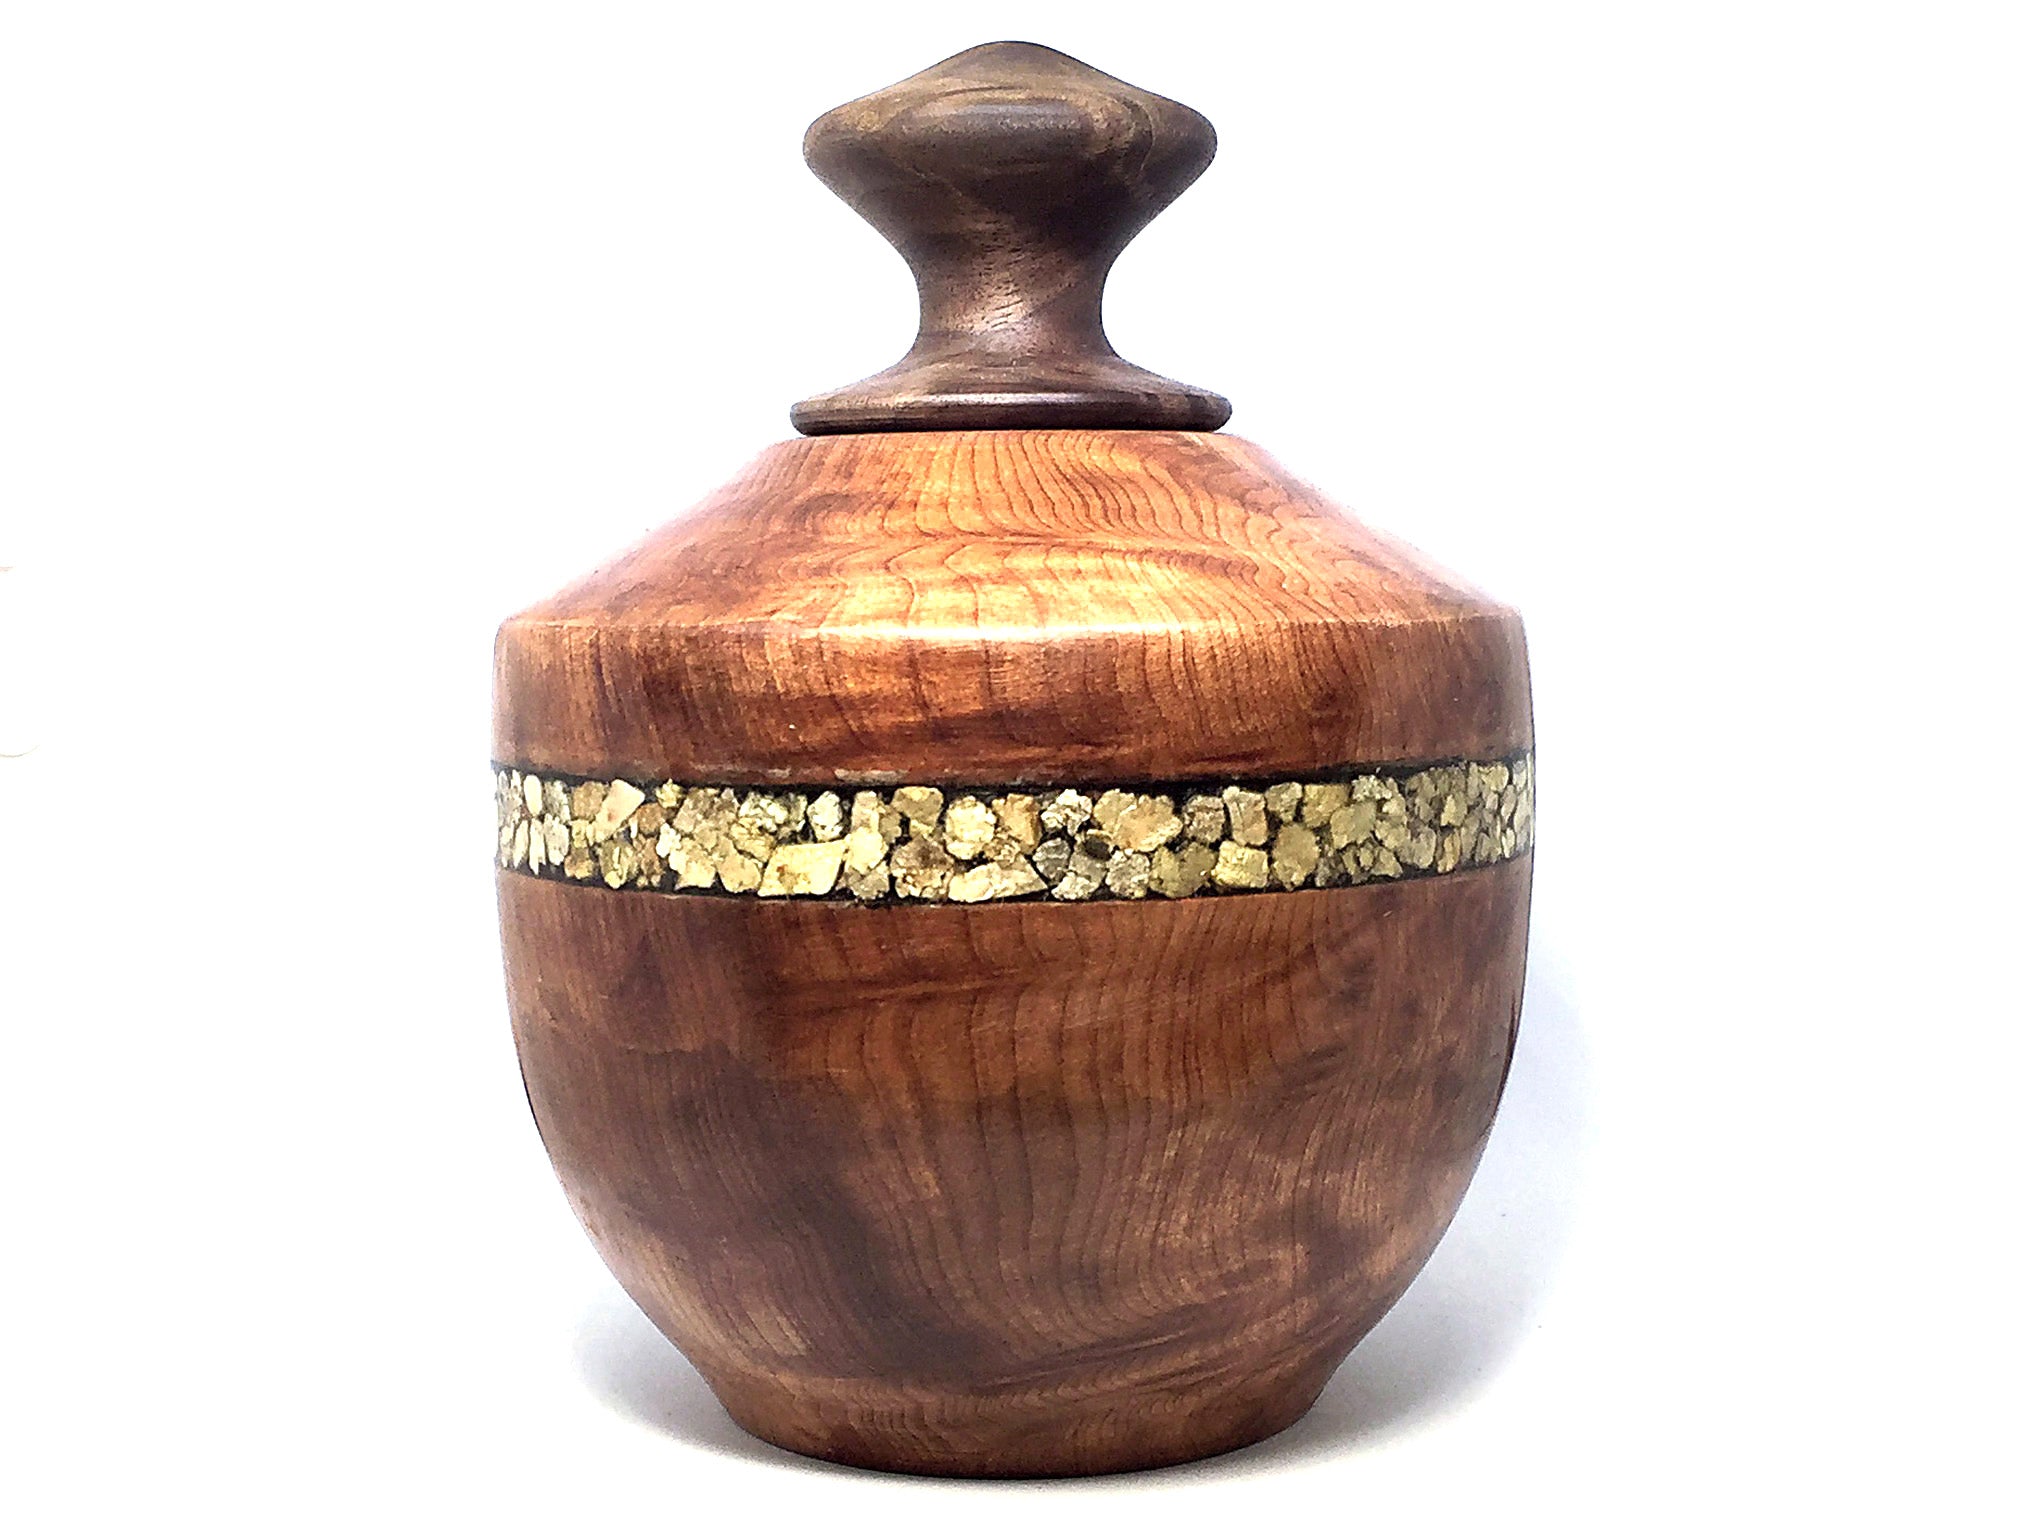 LV-4362  Redwood Burl & Black Walnut Burl Threaded Vessel, Lidded Urn with Vermiculite Inlay